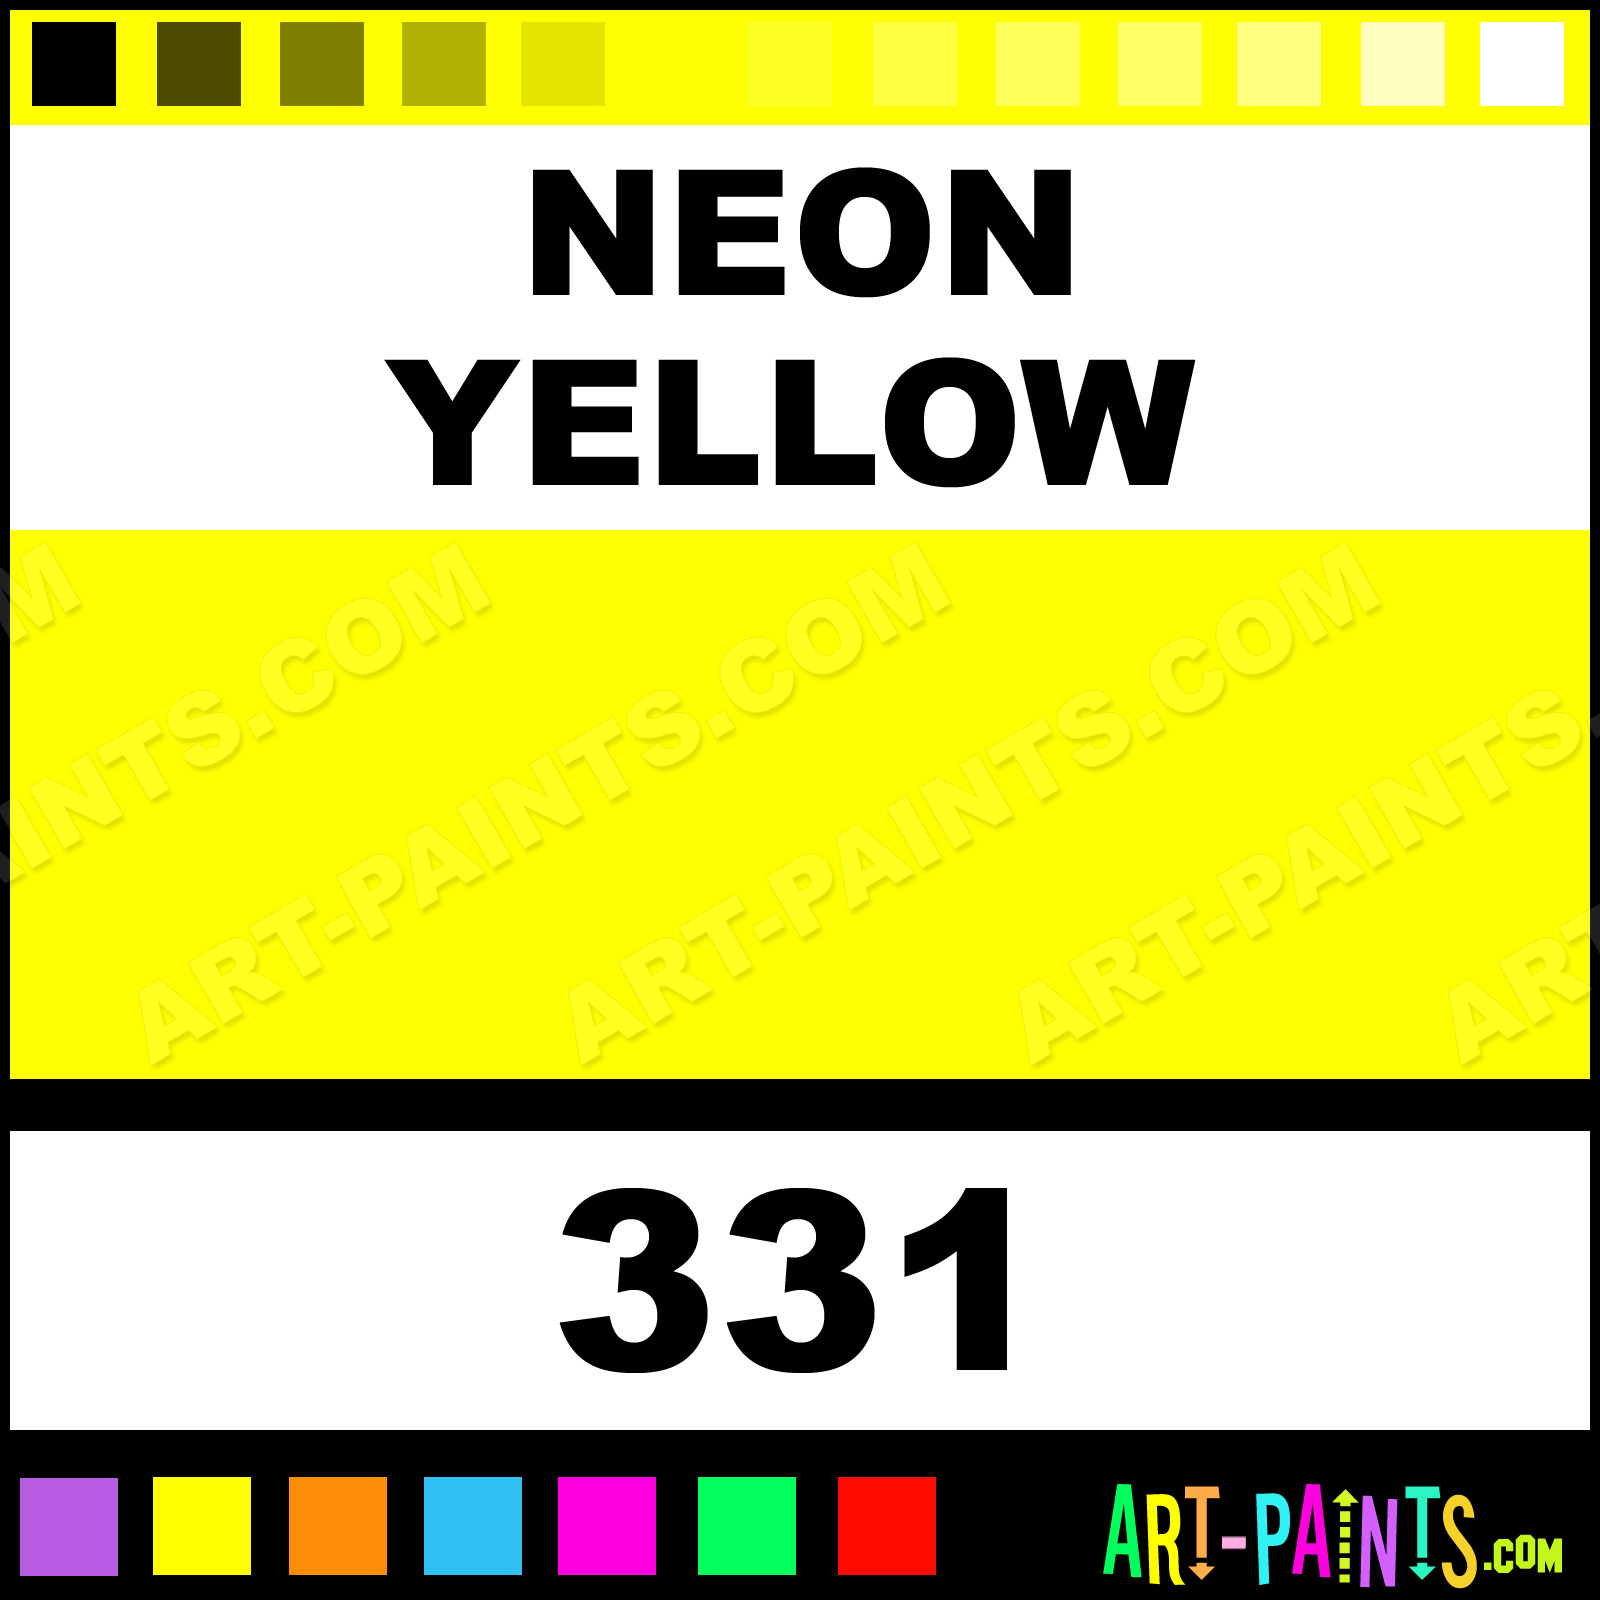 http://www.art-paints.com/Paints/Airbrush/Life-Tone/Neon-Yellow/Neon-Yellow-xlg.jpg